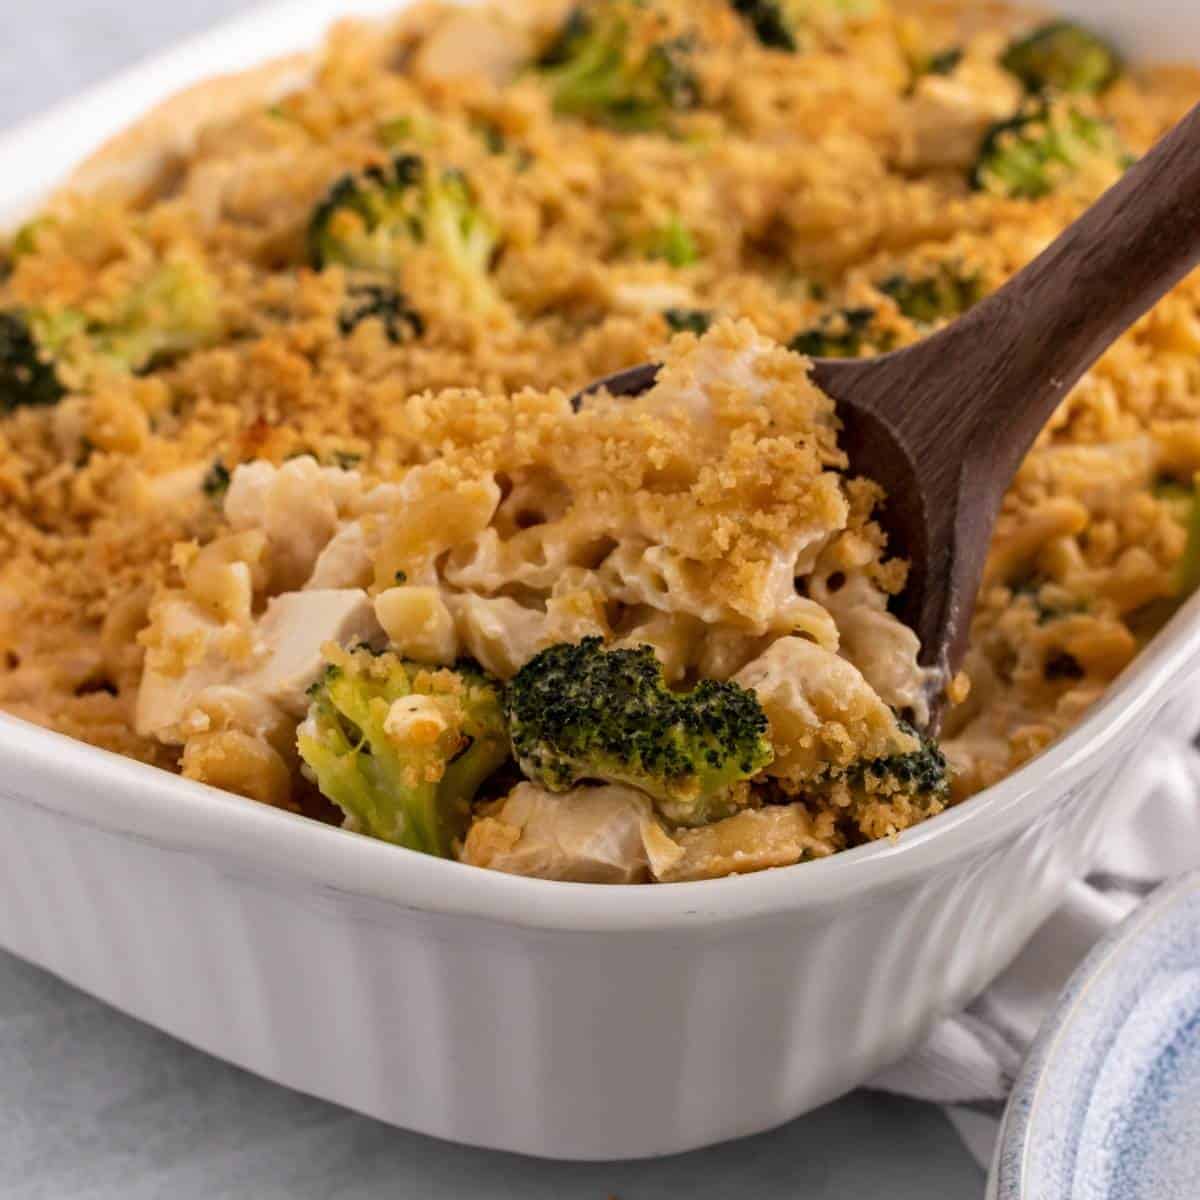 Creamy homemade chicken broccoli bake with pasta